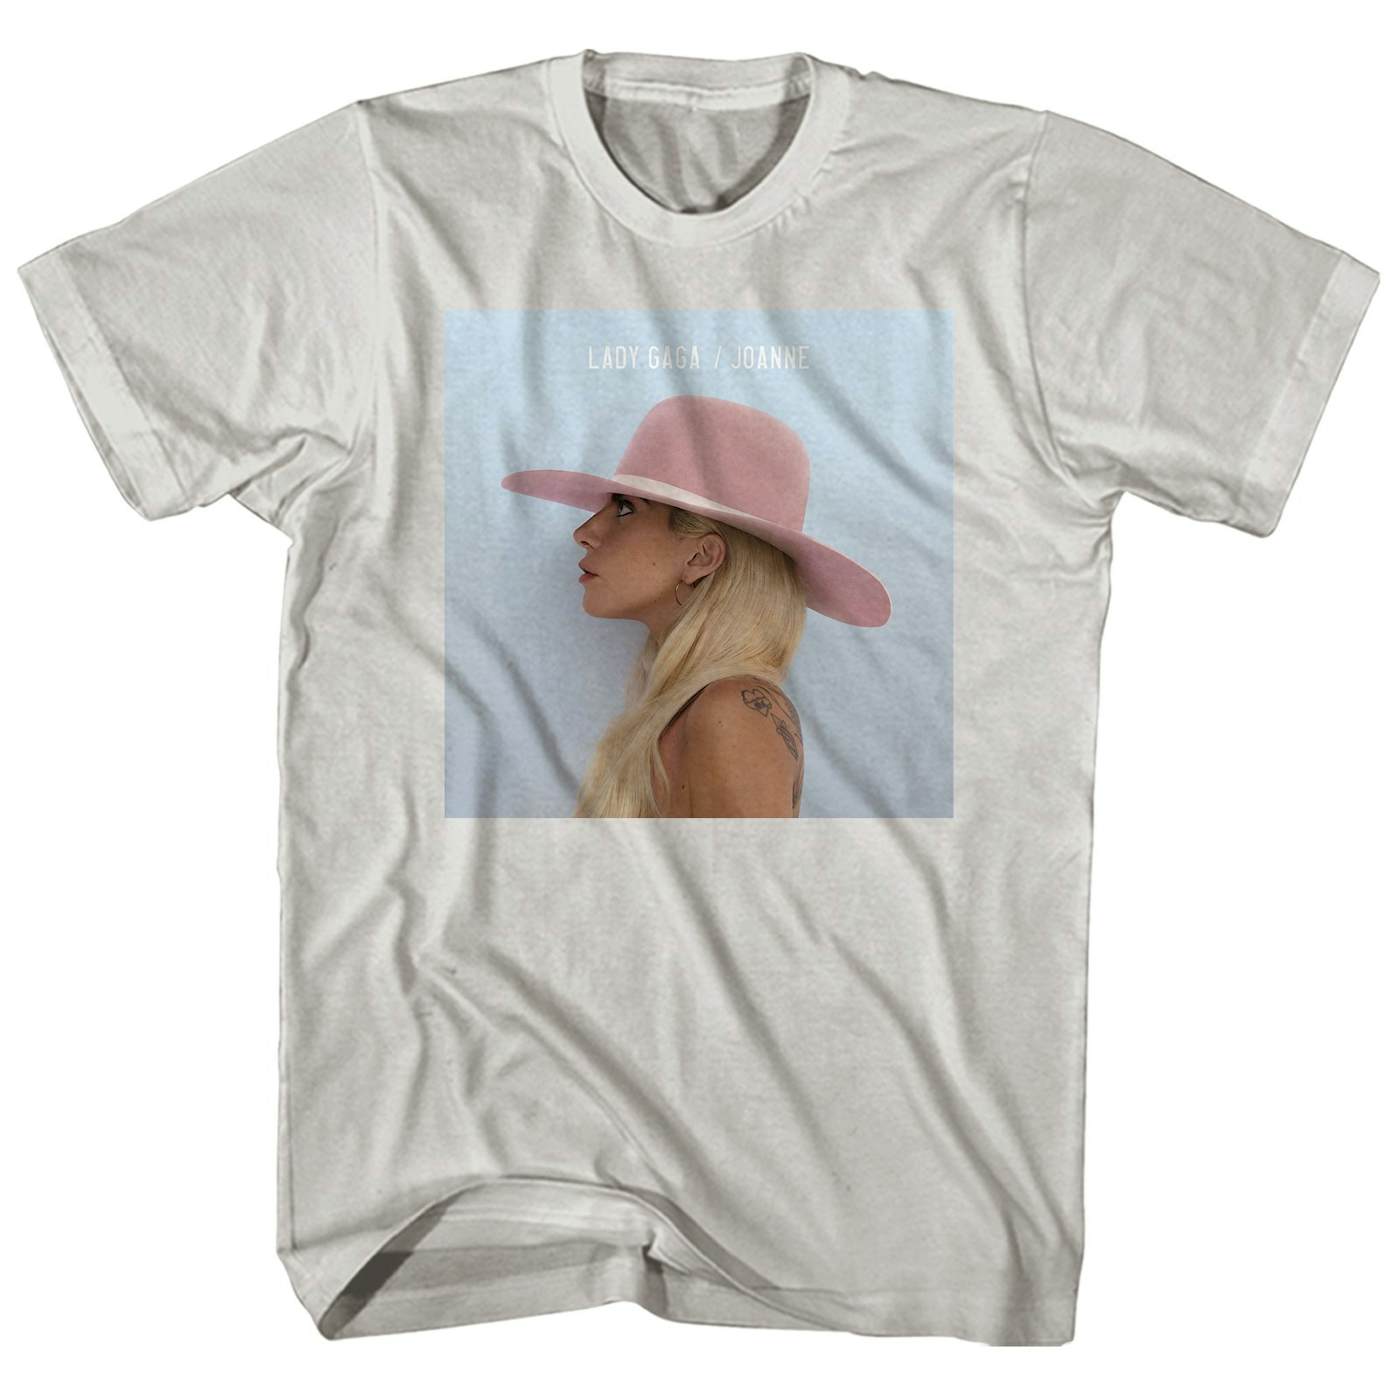 Lady Gaga T-Shirt | Joanne Album Art Lady Gaga T-Shirt